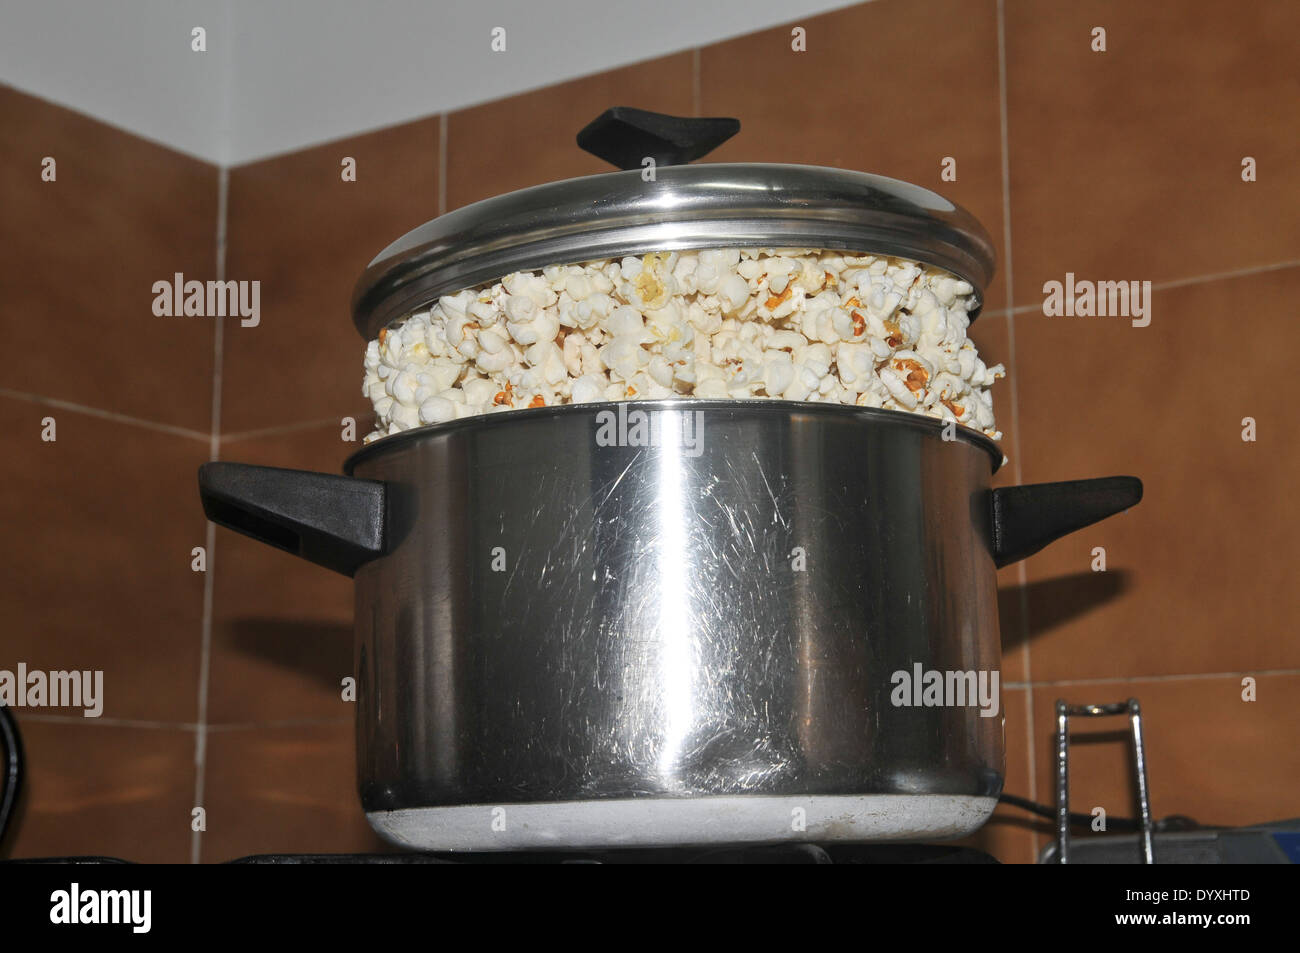 A pot of pop corn on a gas stove Stock Photo - Alamy